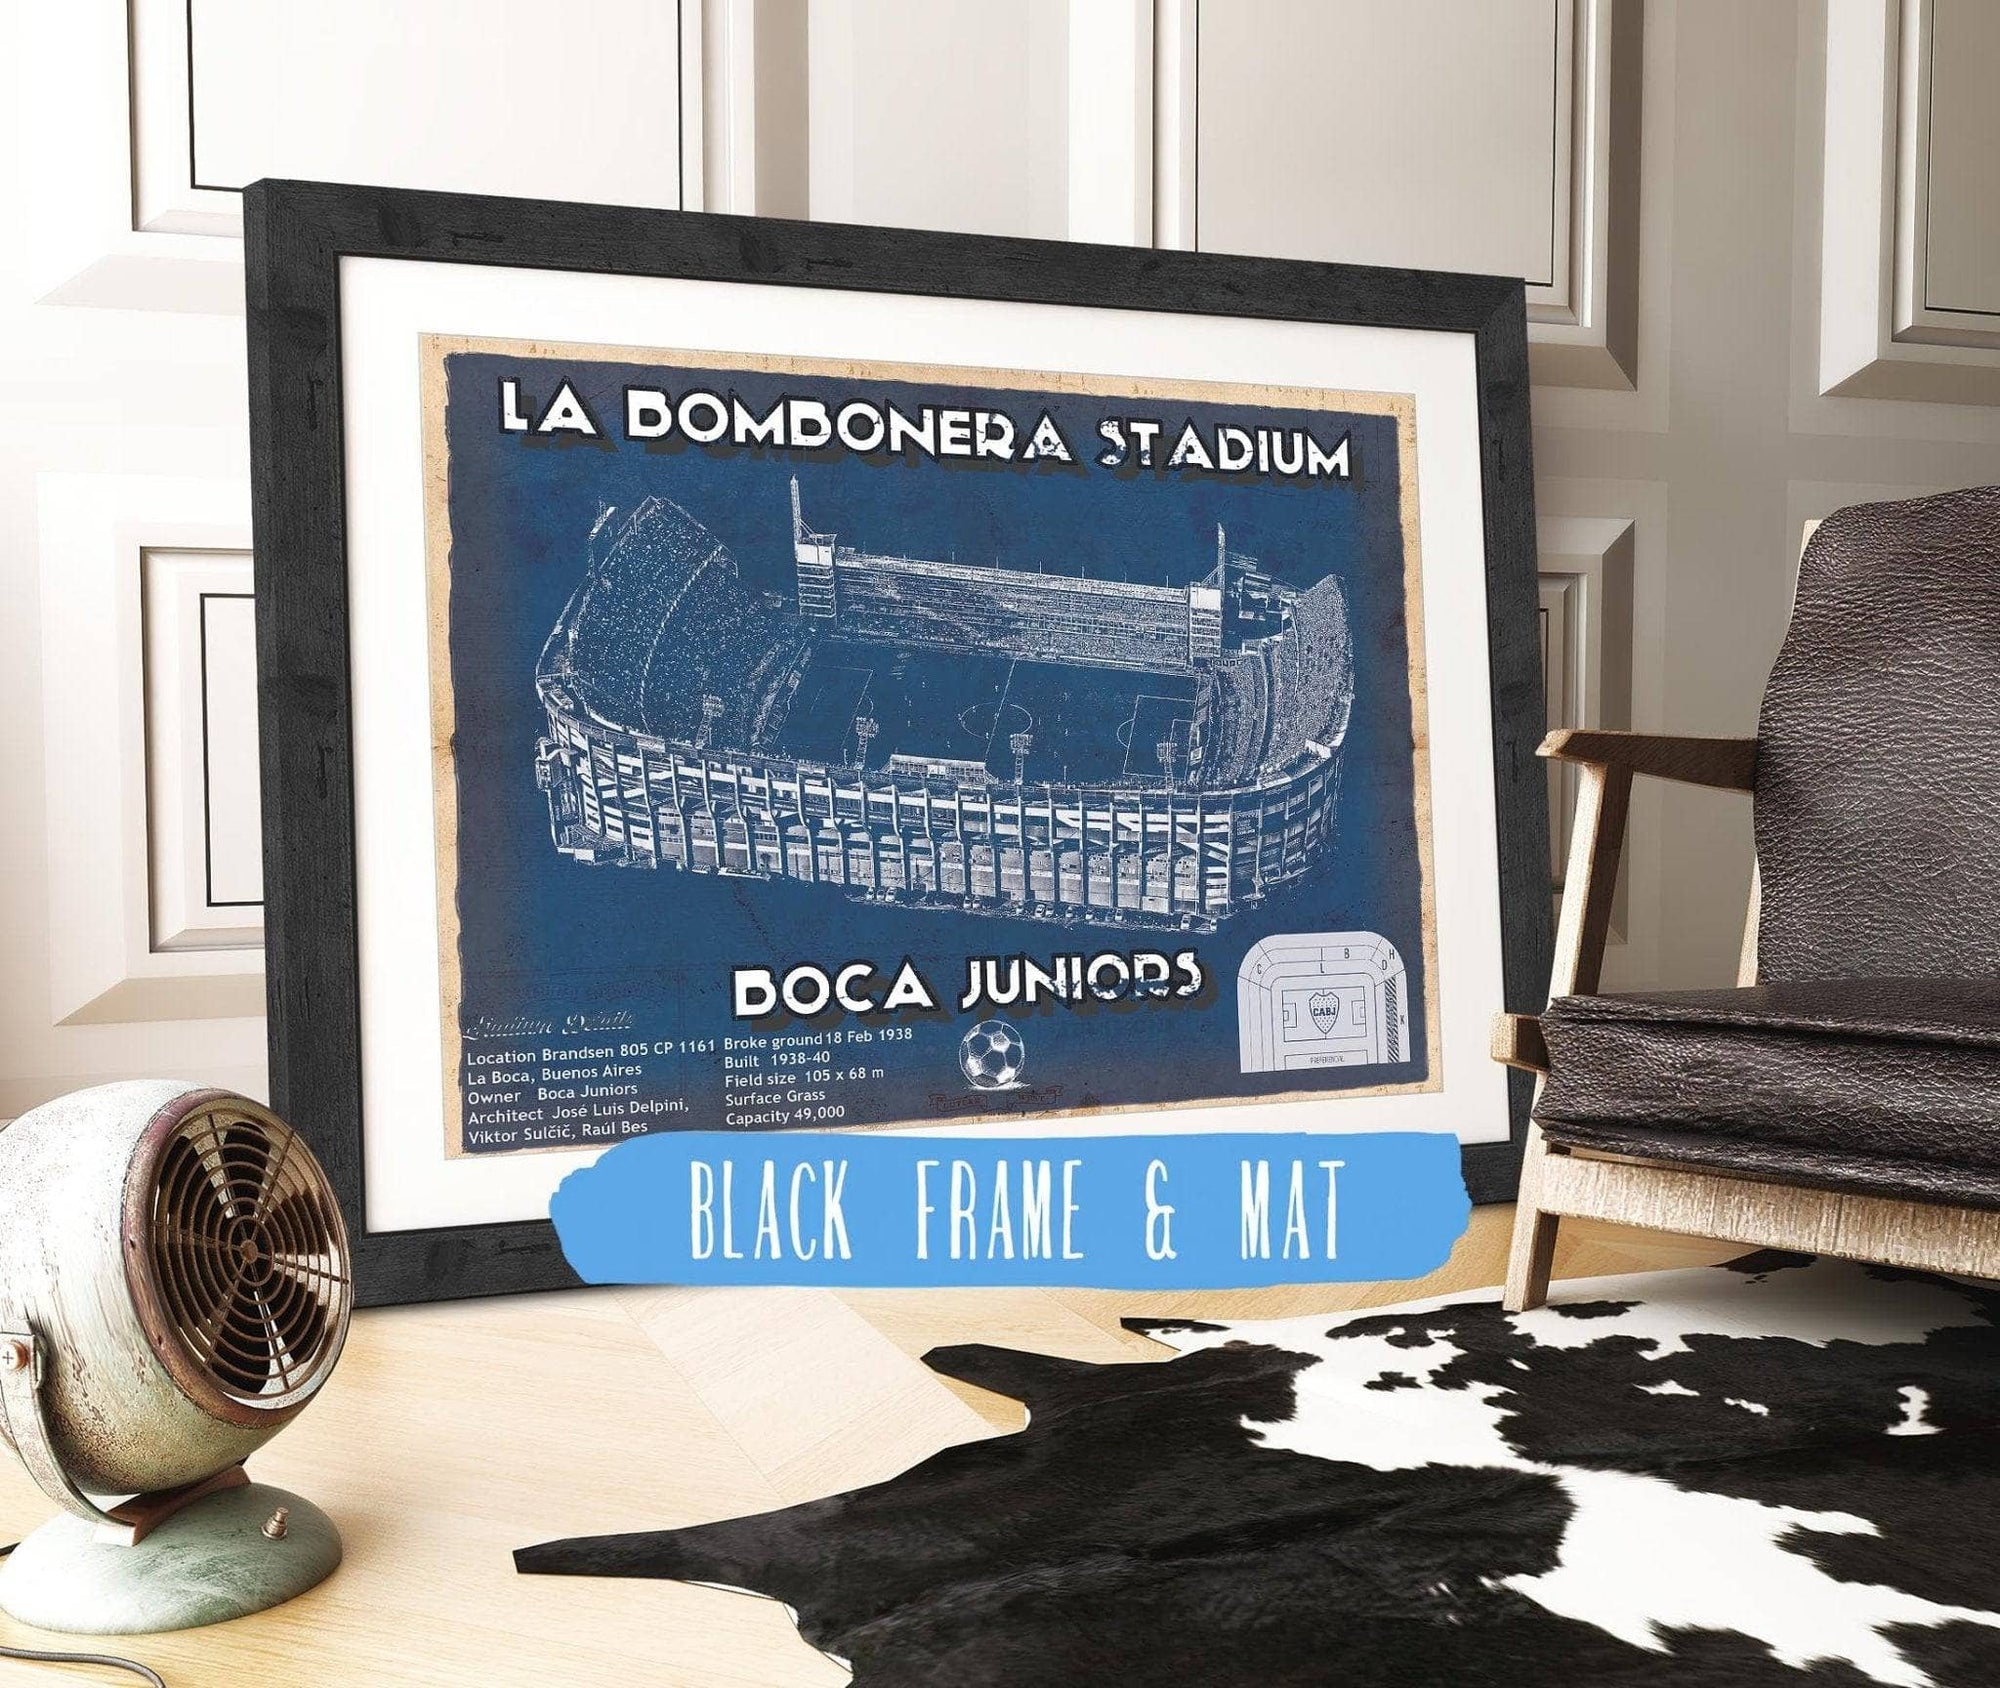 Cutler West Soccer Collection 14" x 11" / Black Frame & Mat Boca Juniors F.C - La Bombonera Stadium Soccer Print 733938727_48607